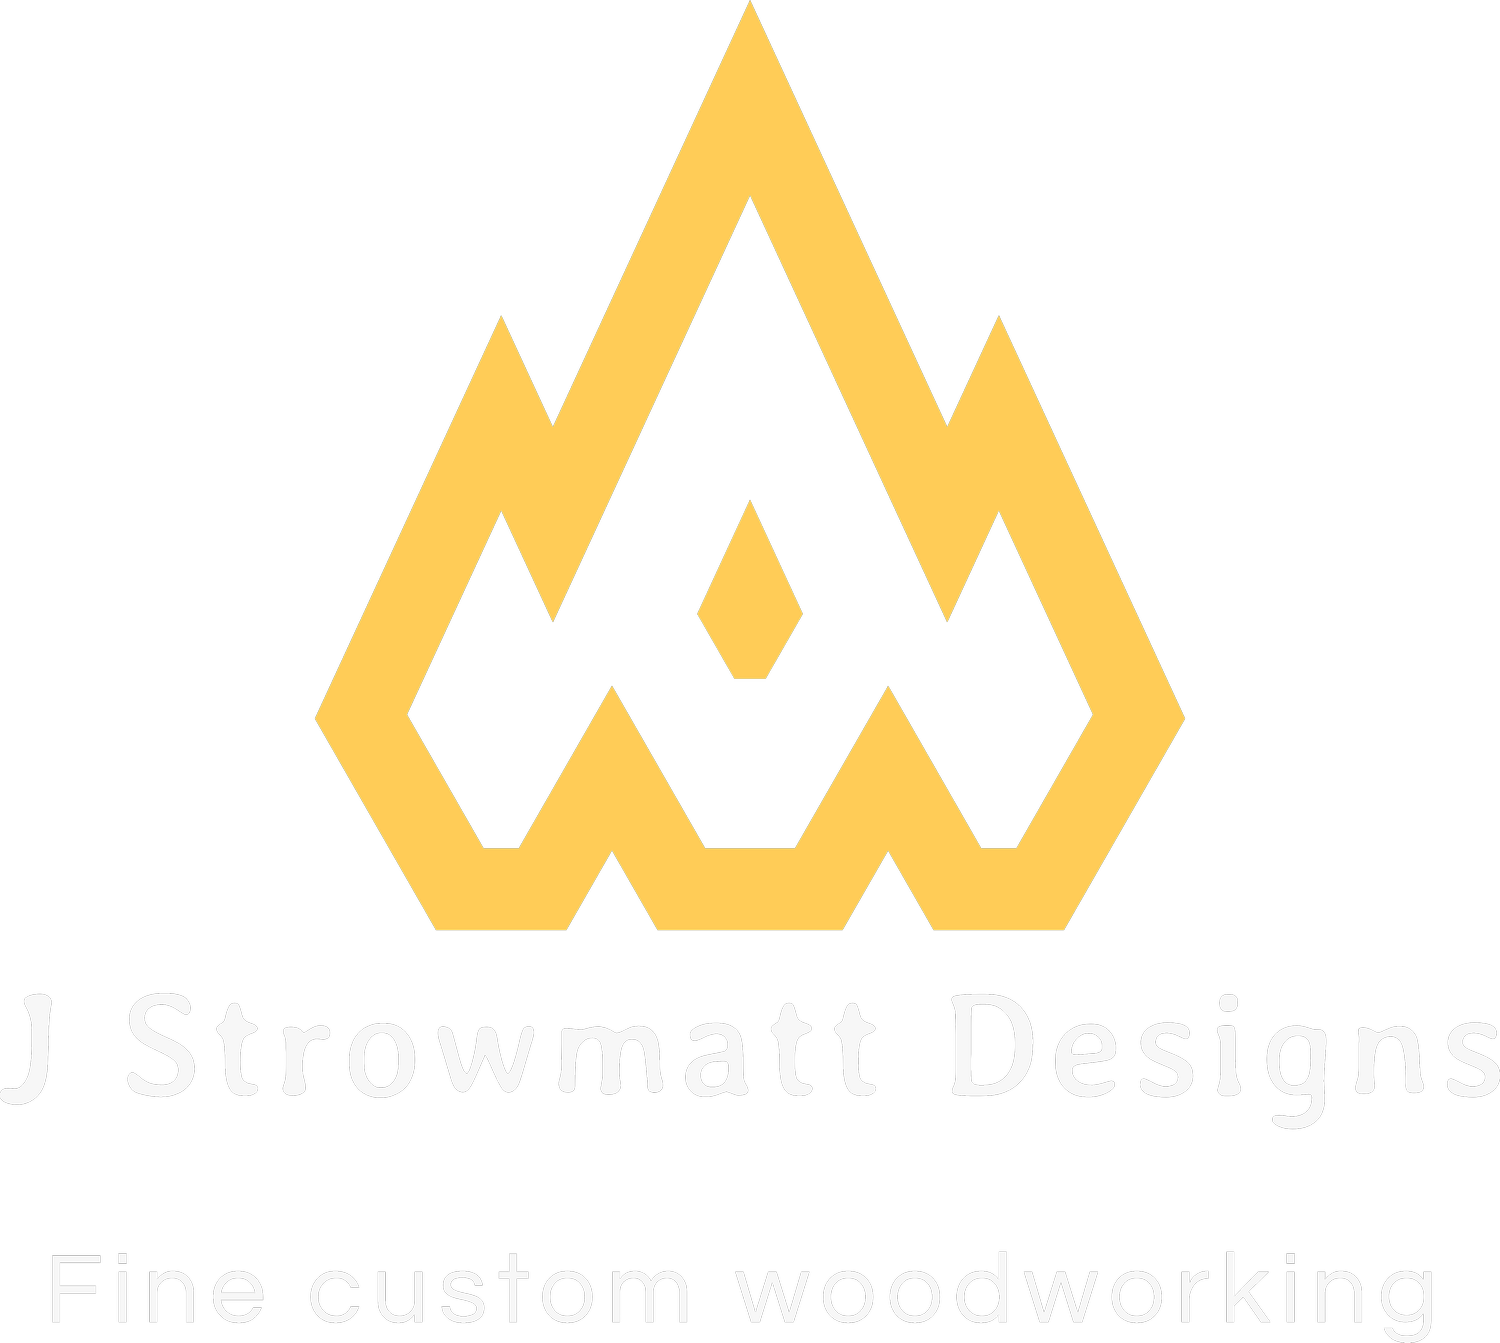 J Strowmatt Designs Custom Woodworking